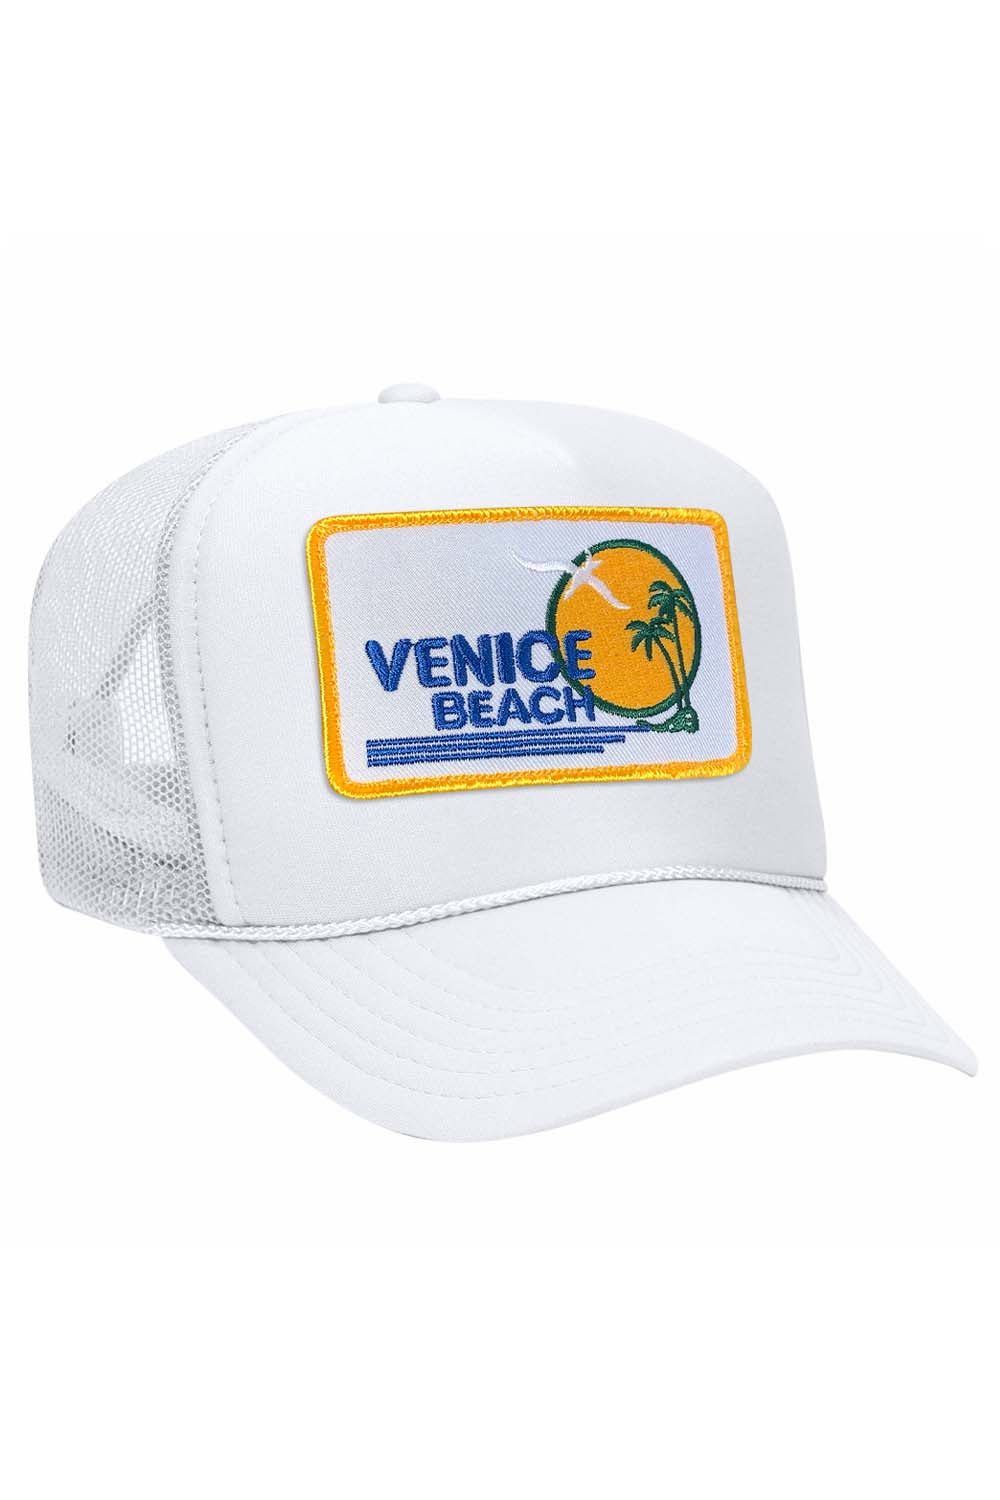 VENICE BEACH VINTAGE TRUCKER HAT HATS Aviator Nation OS WHITE 